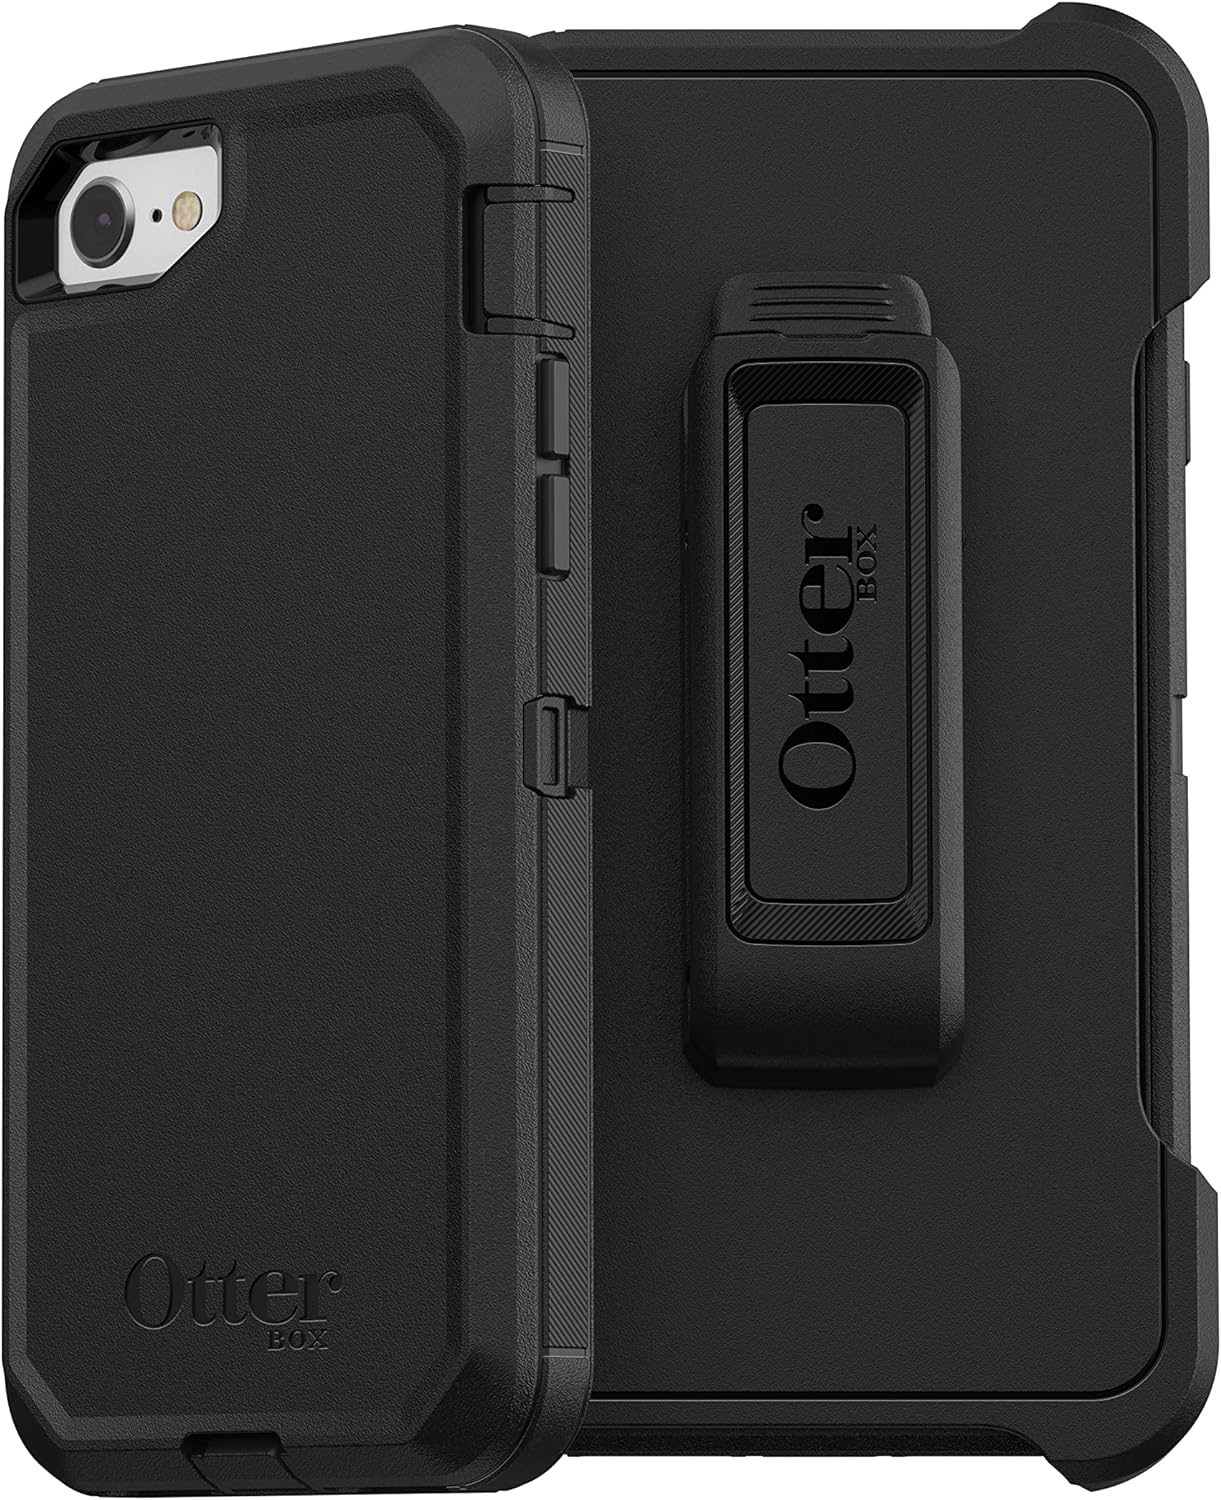 OtterBox DEFENDER SERIES Case for Apple iPhone 7/8 - Black (Certified Refurbished)